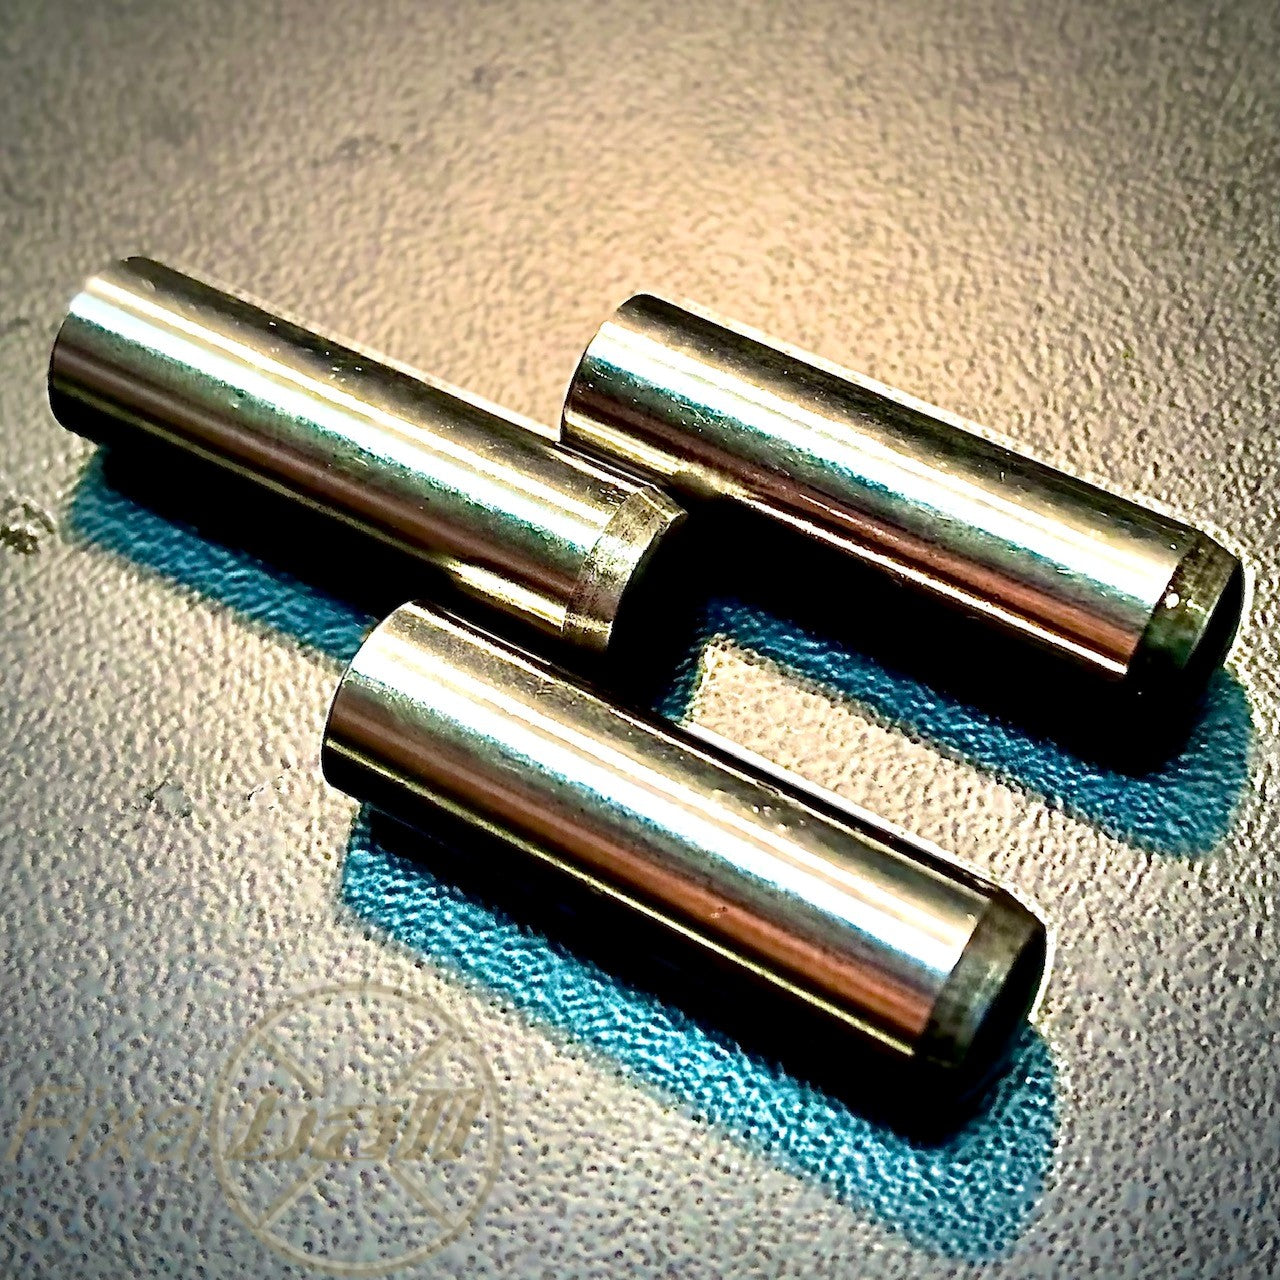 5mm, Dowel Pins Hardened & Ground, Steel, DIN 6325 Dowel Pins 5mm, Dowel Pins Hardened & Ground, Steel, DIN 6325 Dowel Pins – Harden and Ground